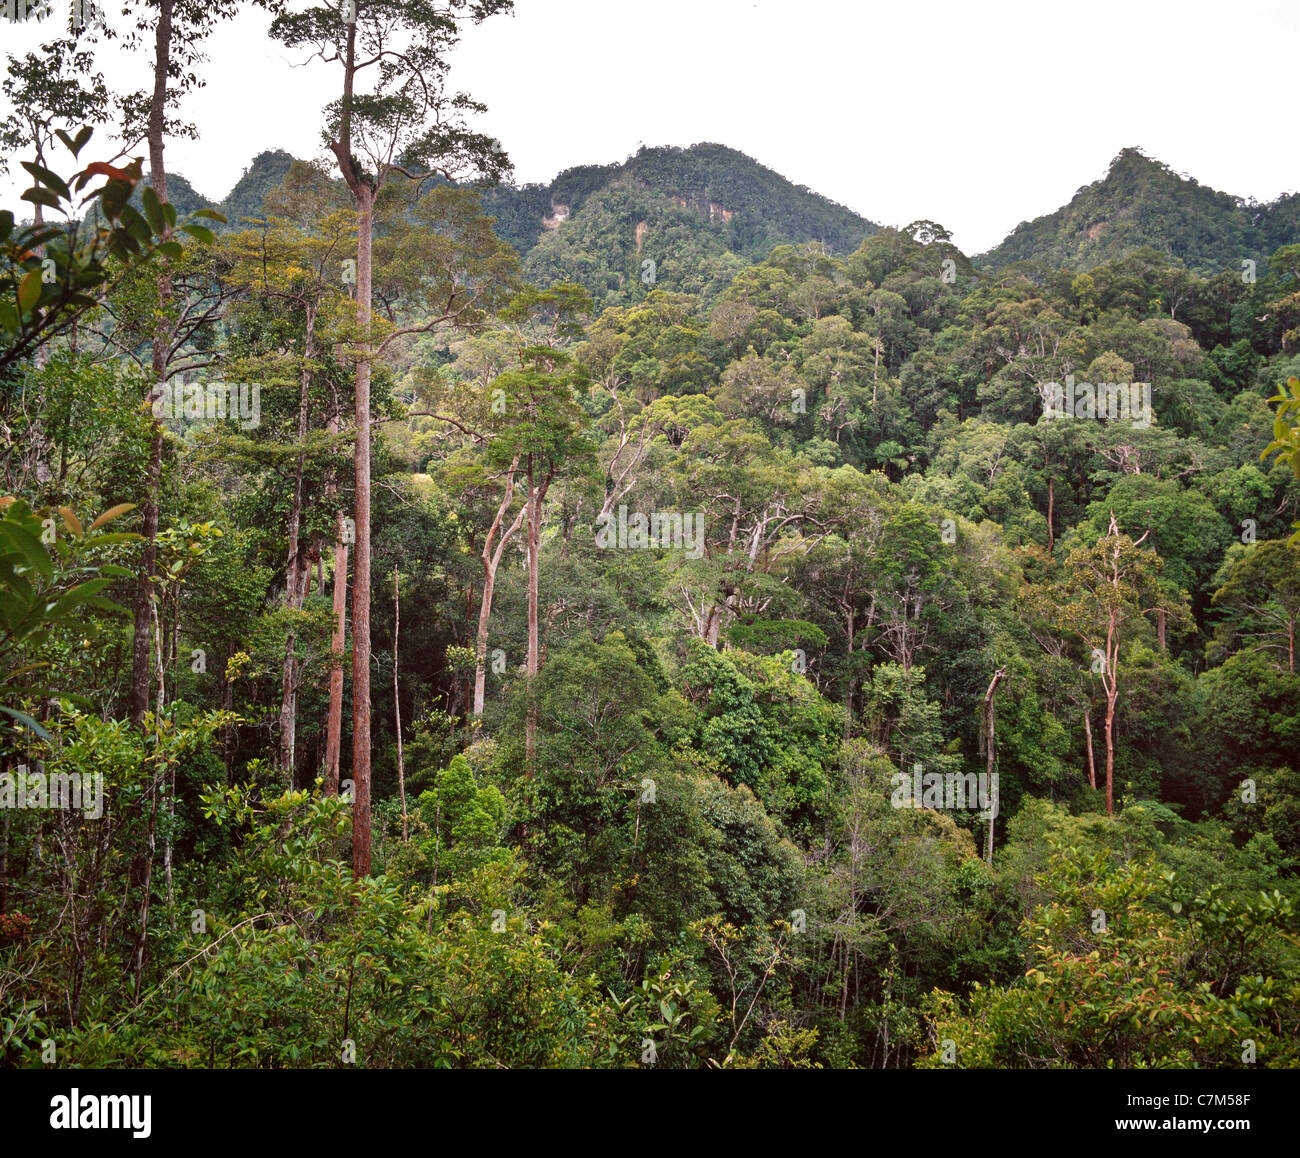 Lambir Hills National Park, Sarawak, l'Est de la Malaisie, Bornéo, montrant les pics caractéristiques. Banque D'Images